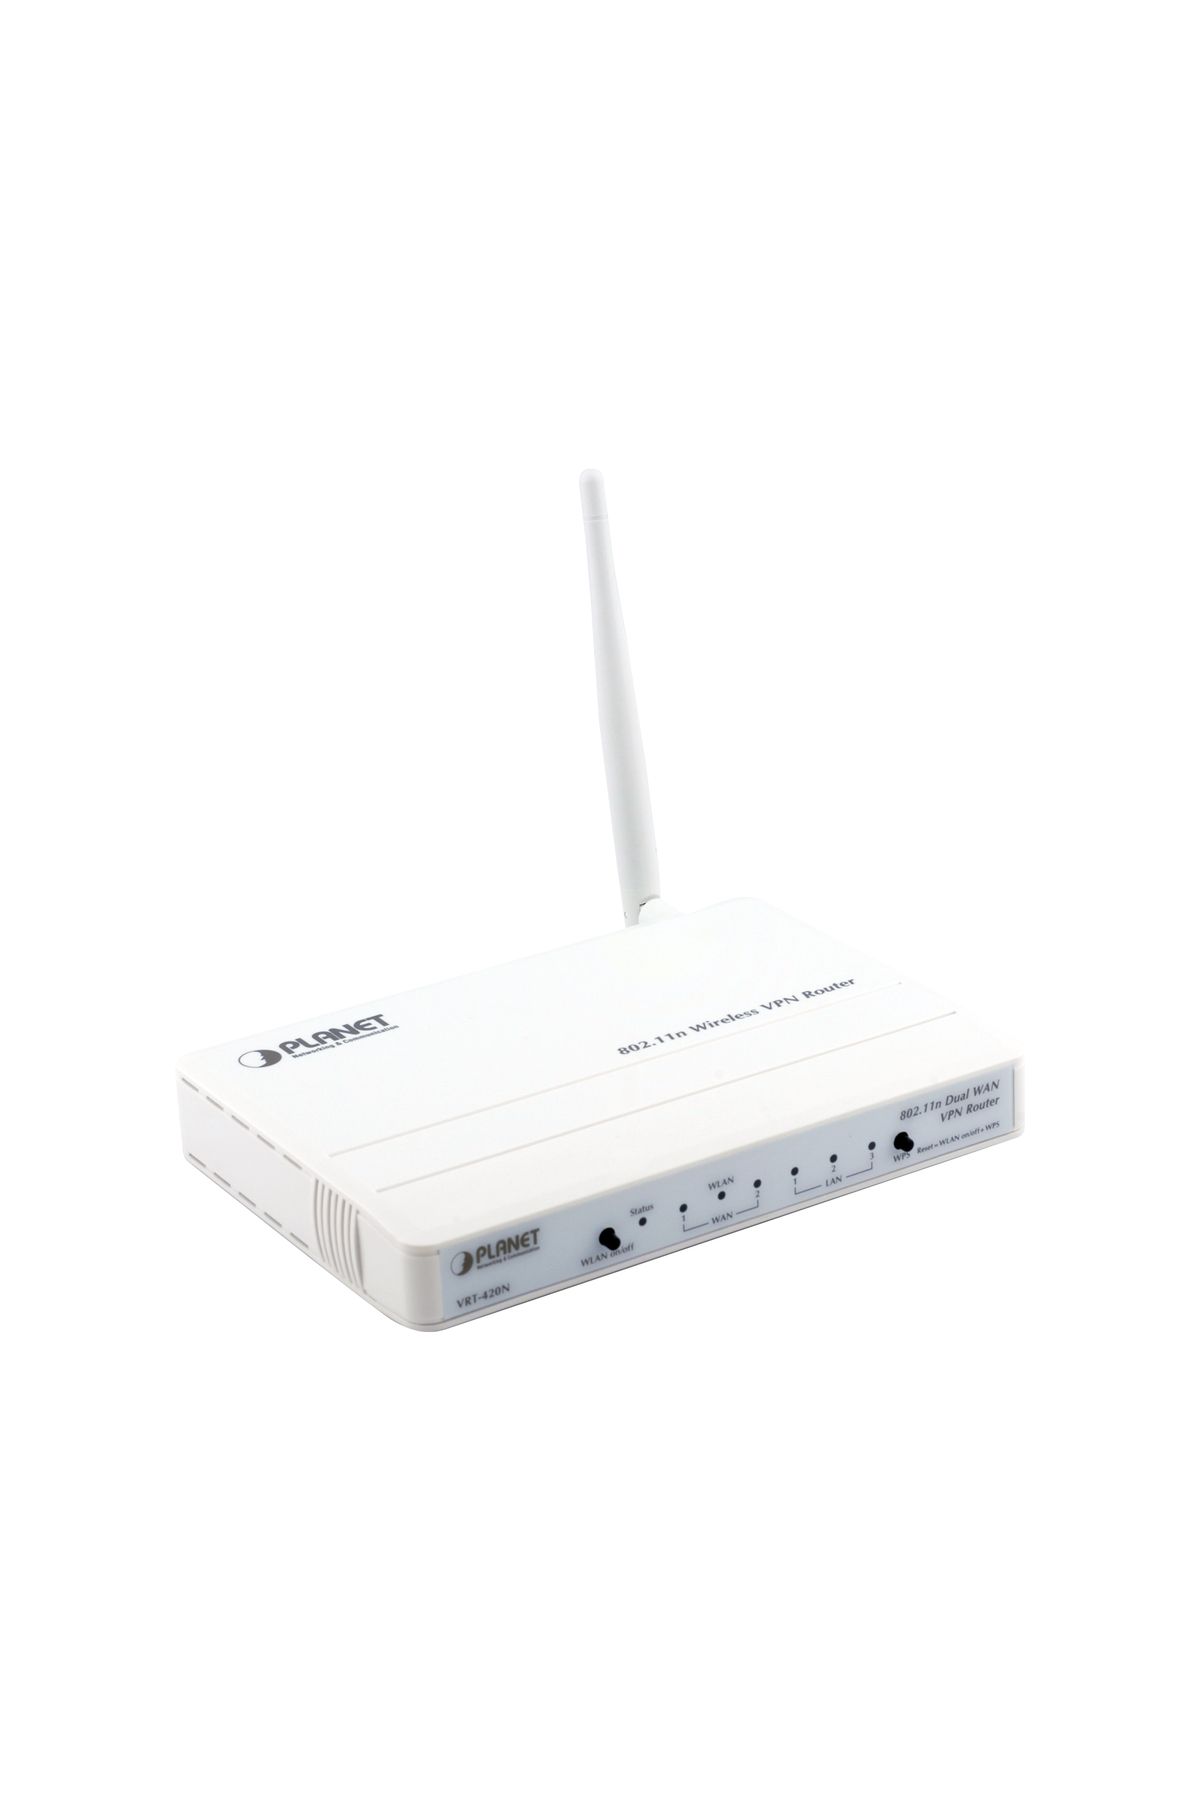 Planet 802.11n Multi-Homing Broadband Firewall Router